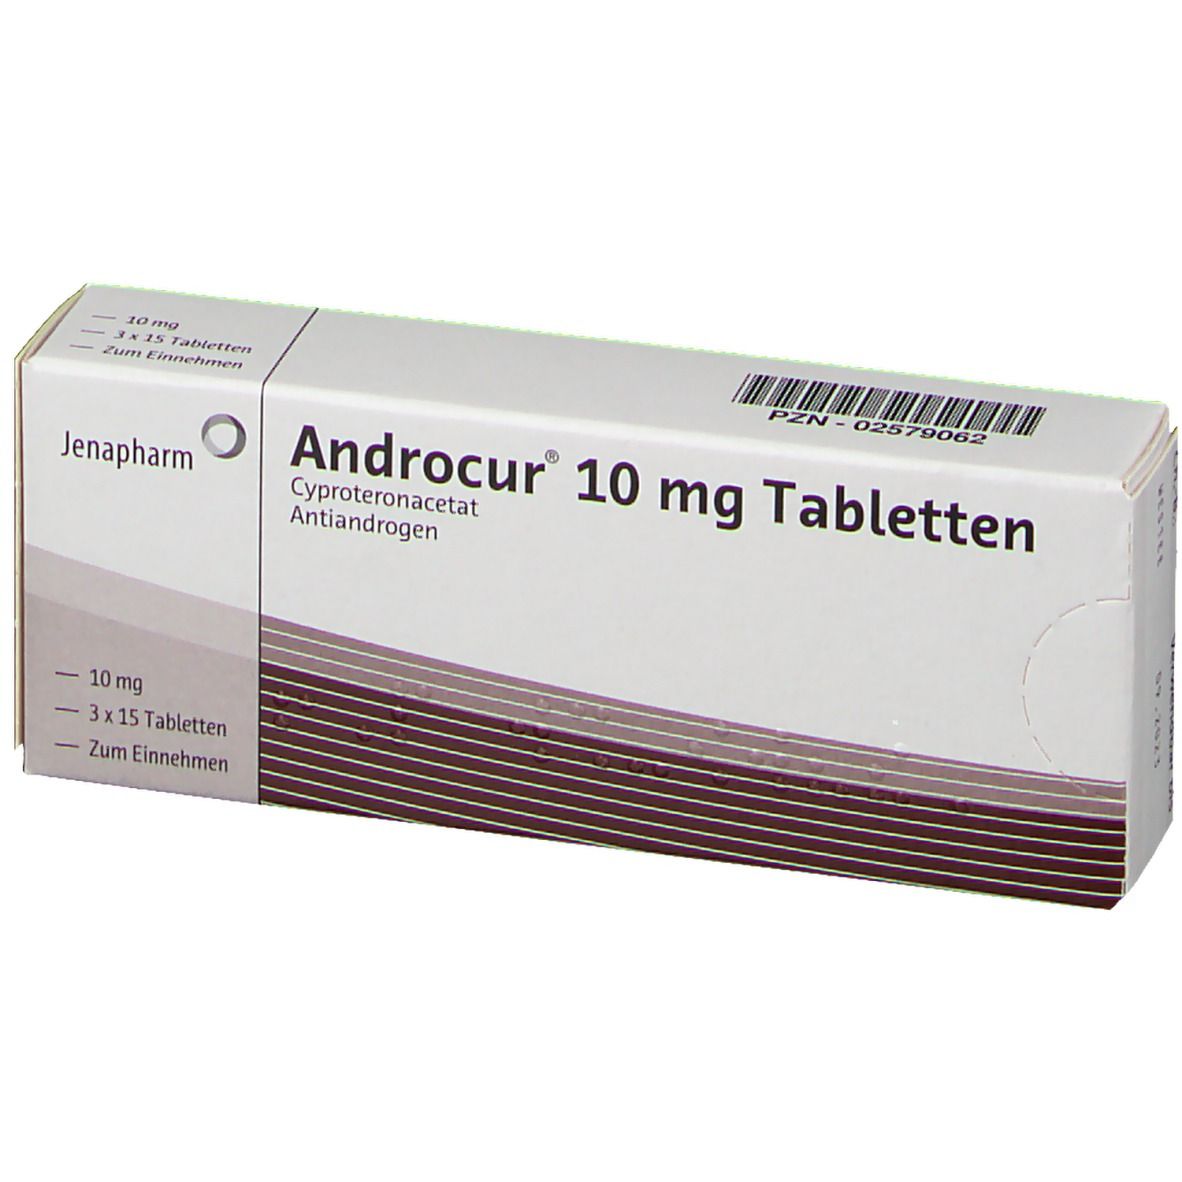 Androcur® 10 mg